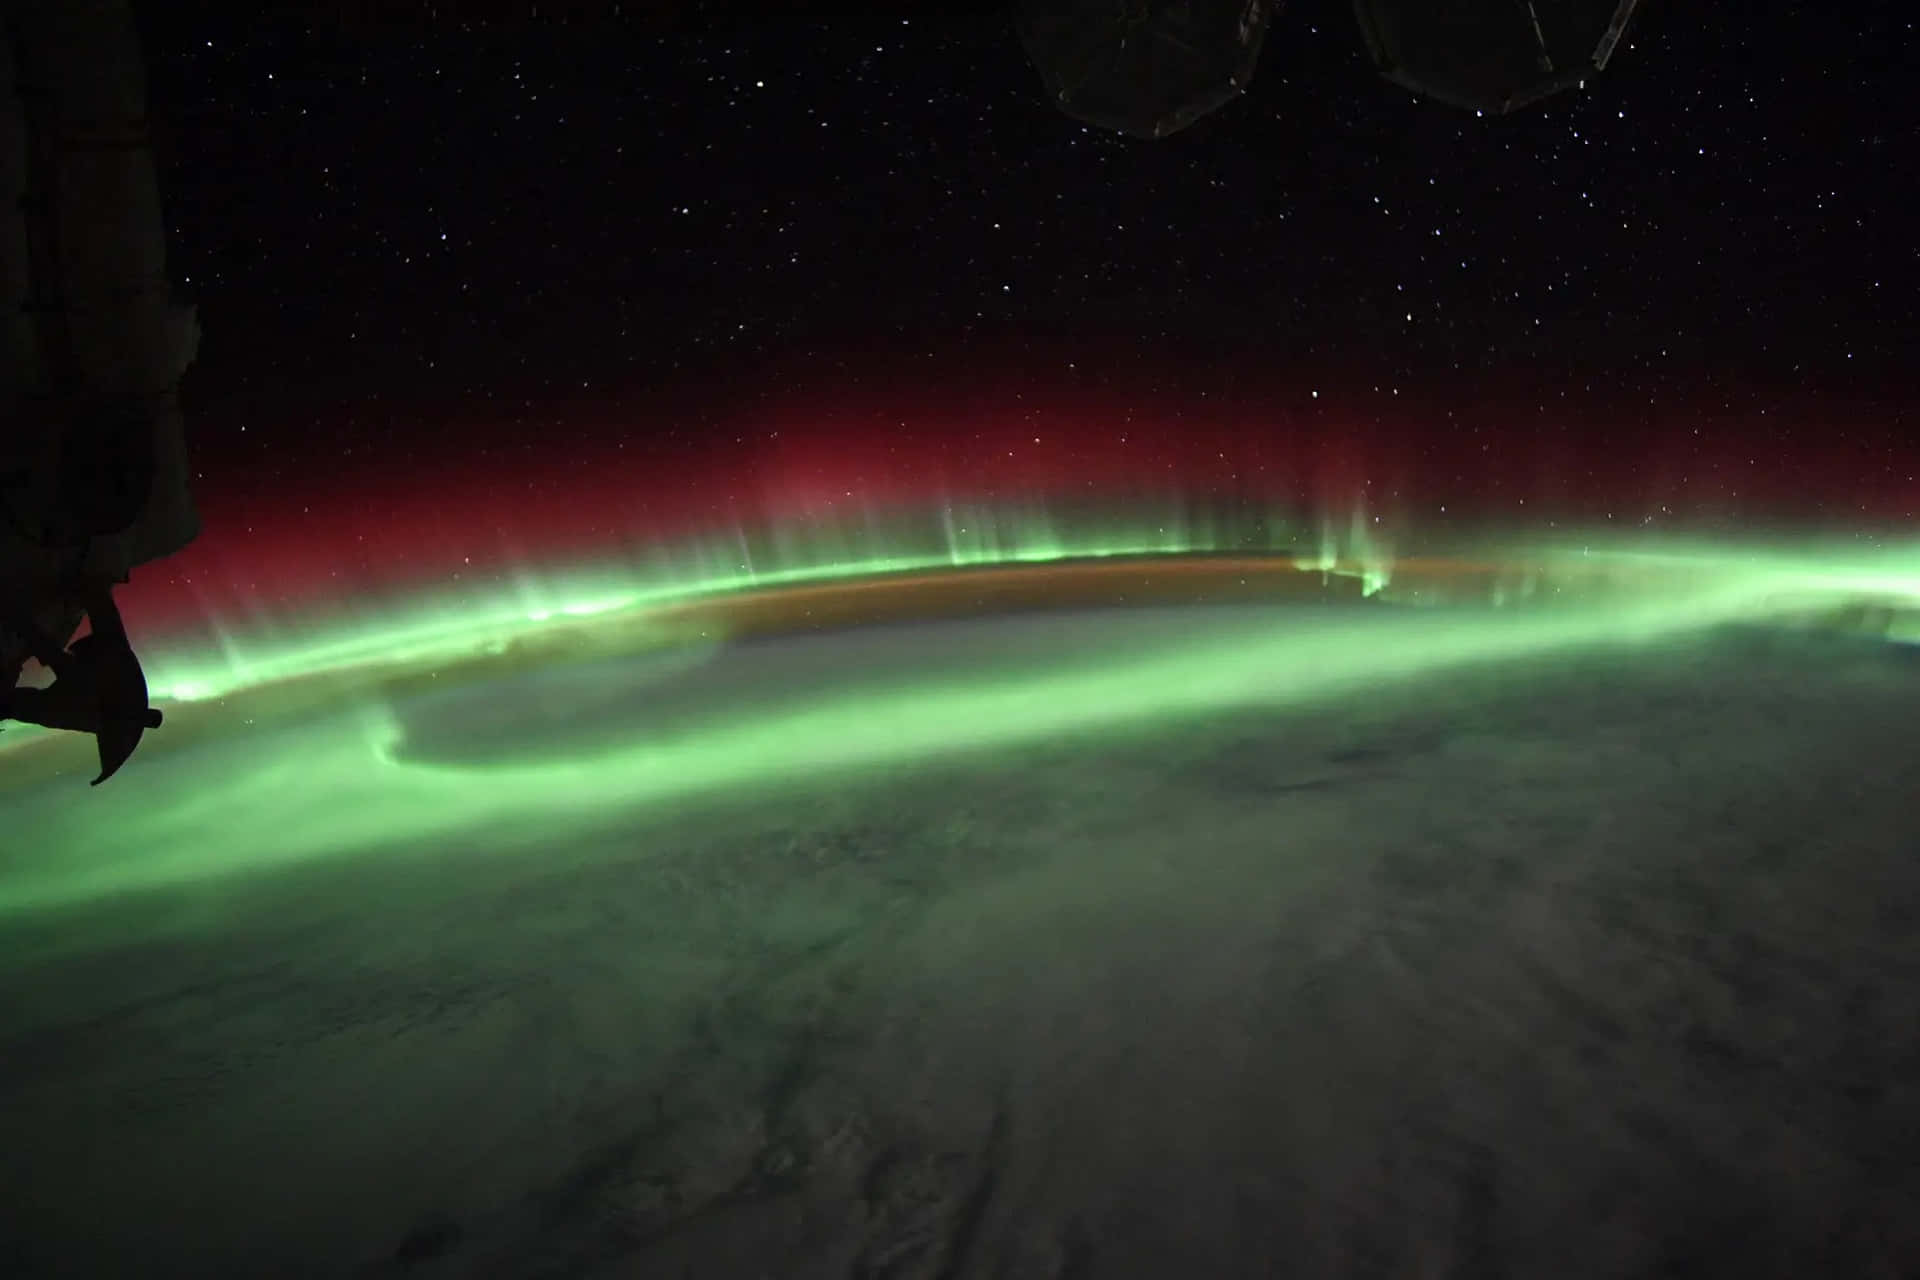 The stunning Aurora Borealis lights up the night sky